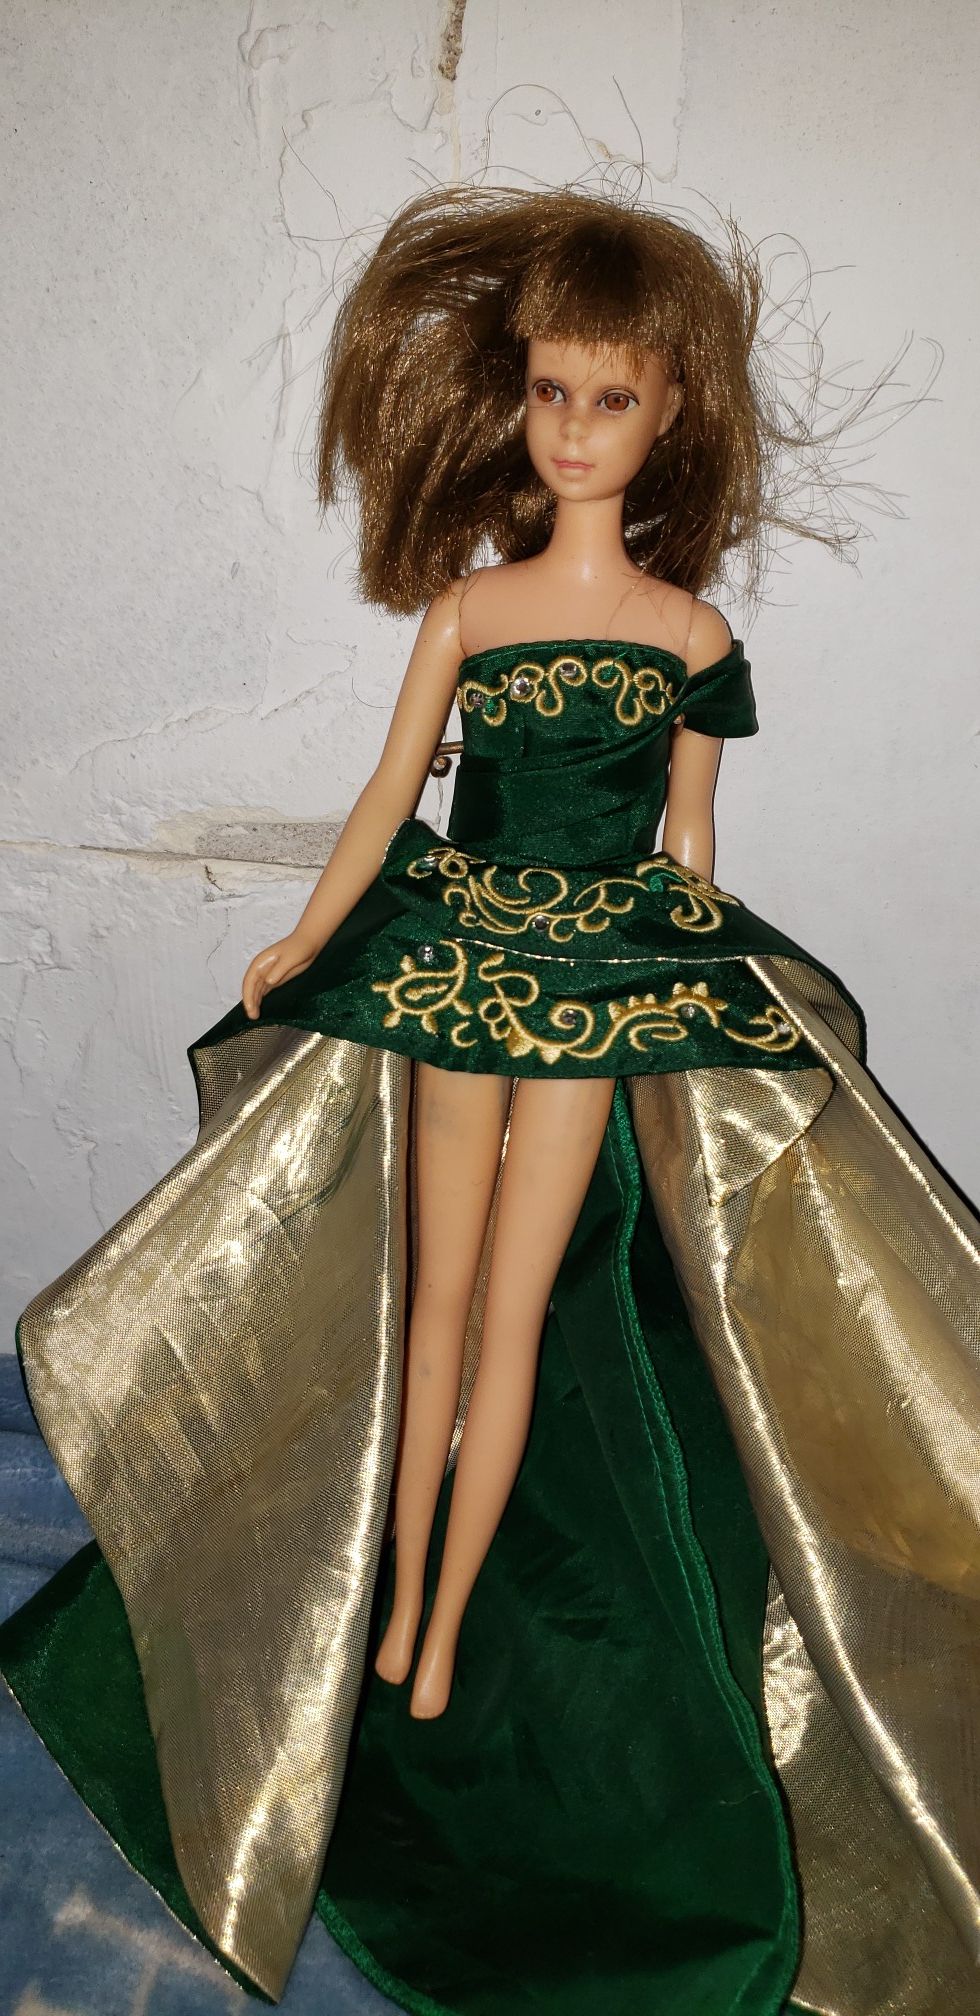 1960's Barbie doll